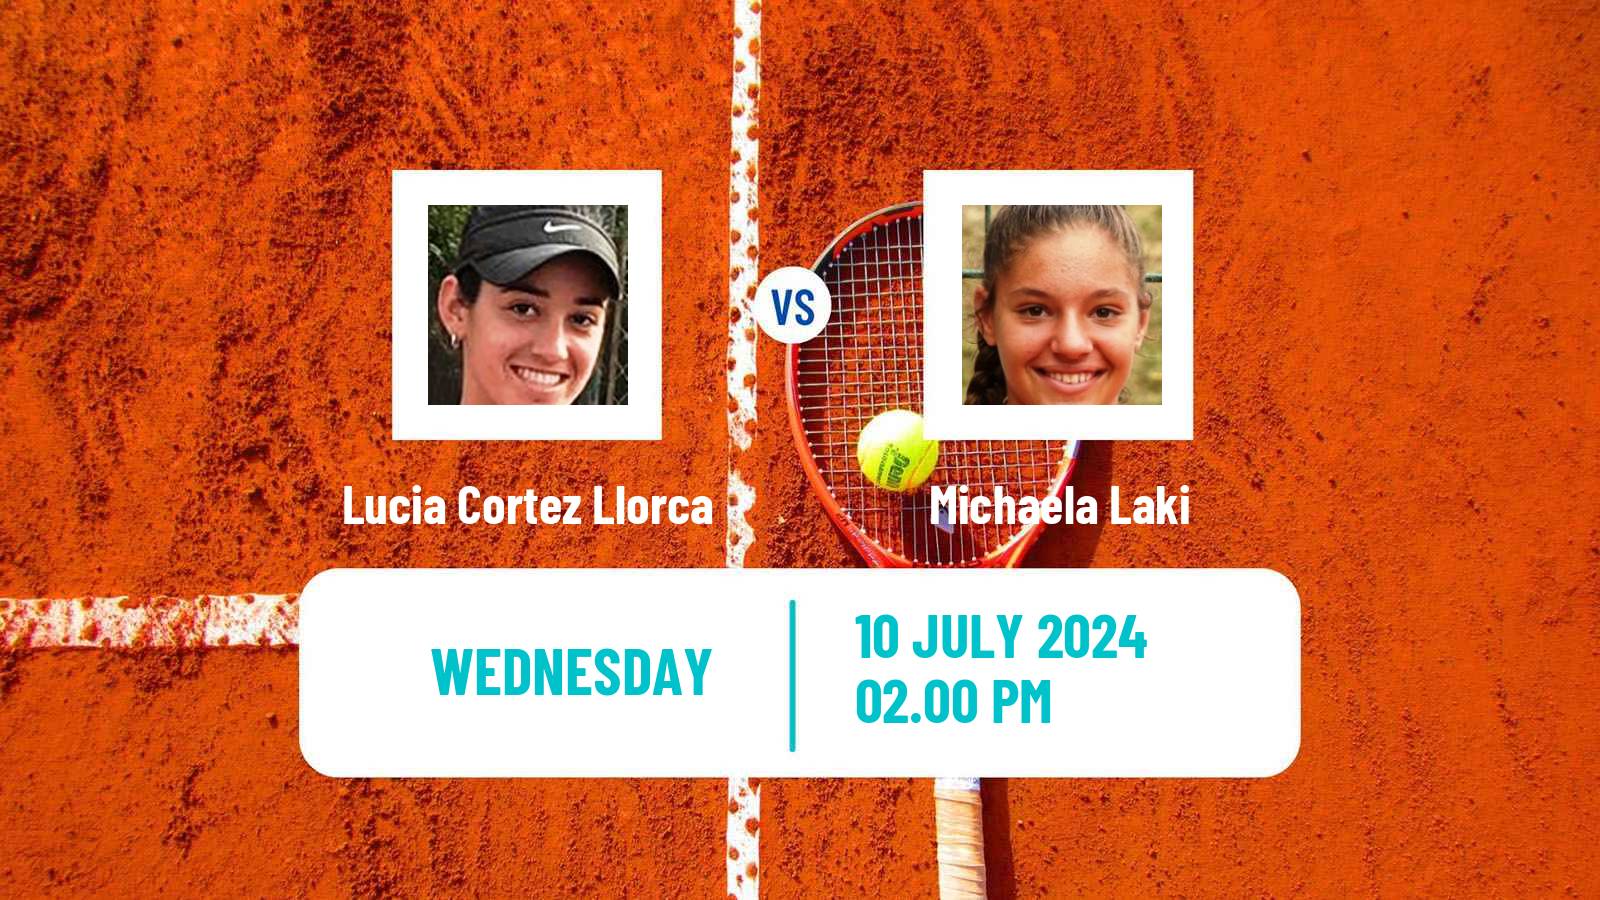 Tennis ITF W75 The Hague Women Lucia Cortez Llorca - Michaela Laki